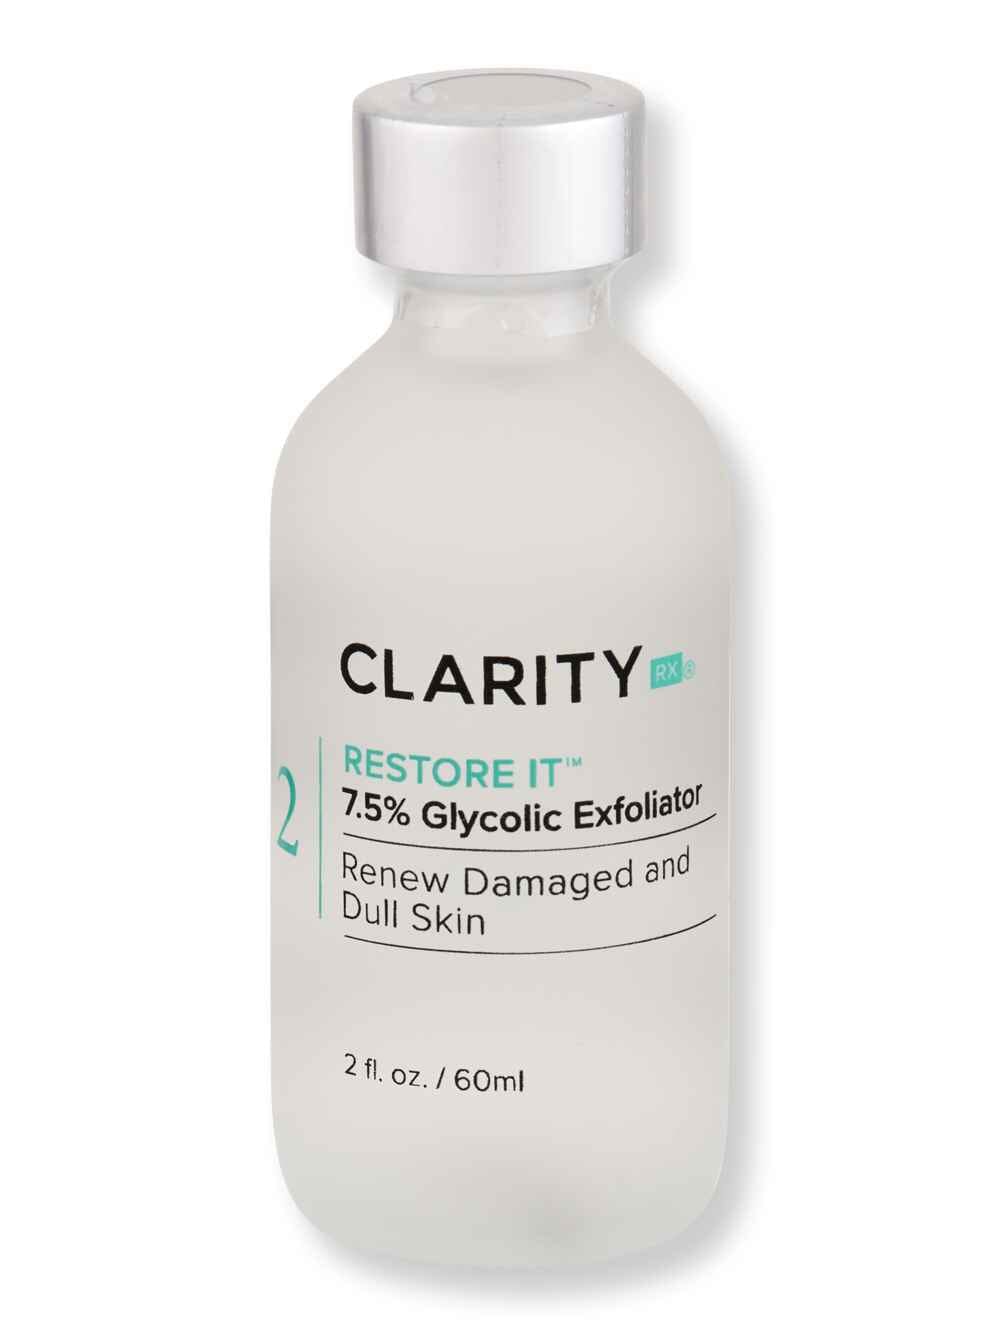 ClarityRx ClarityRx Restore It 7.5% Glycolic Exfoliator 2 oz Exfoliators & Peels 